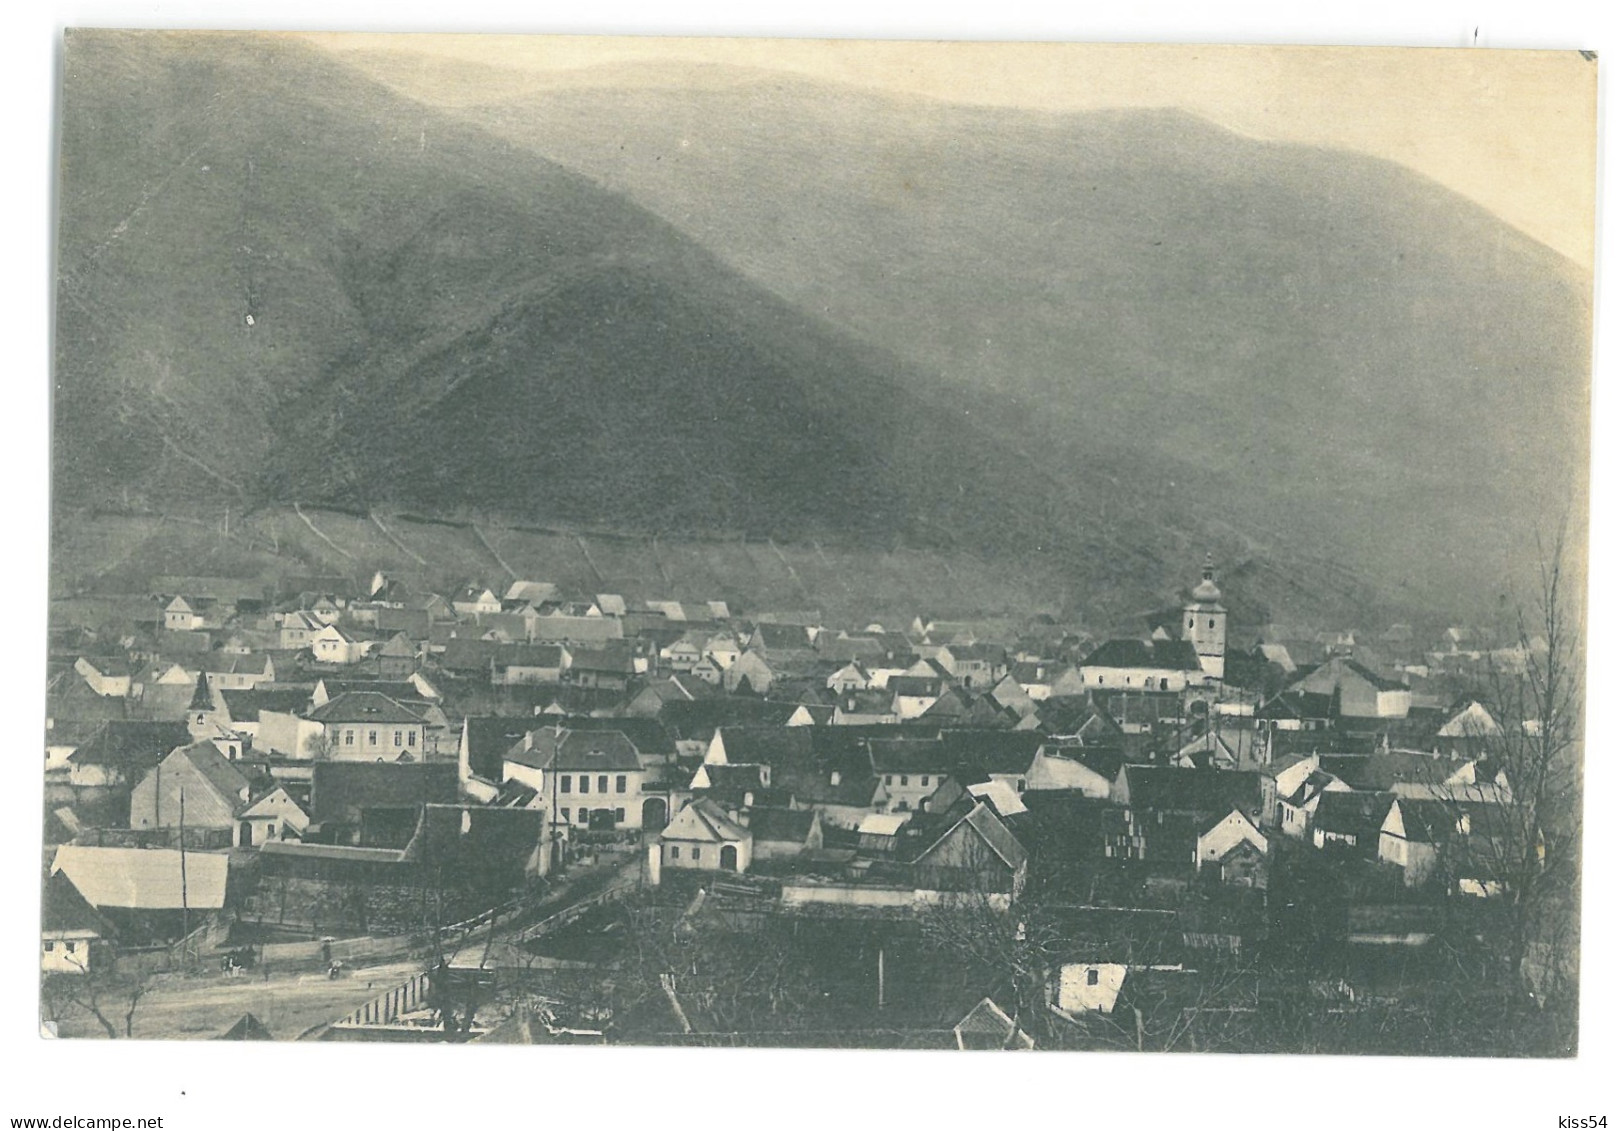 RO 05 - 17931 SADU, Sibiu, Panorama, Romania - Old Postcard - Used - 1916 - Roumanie